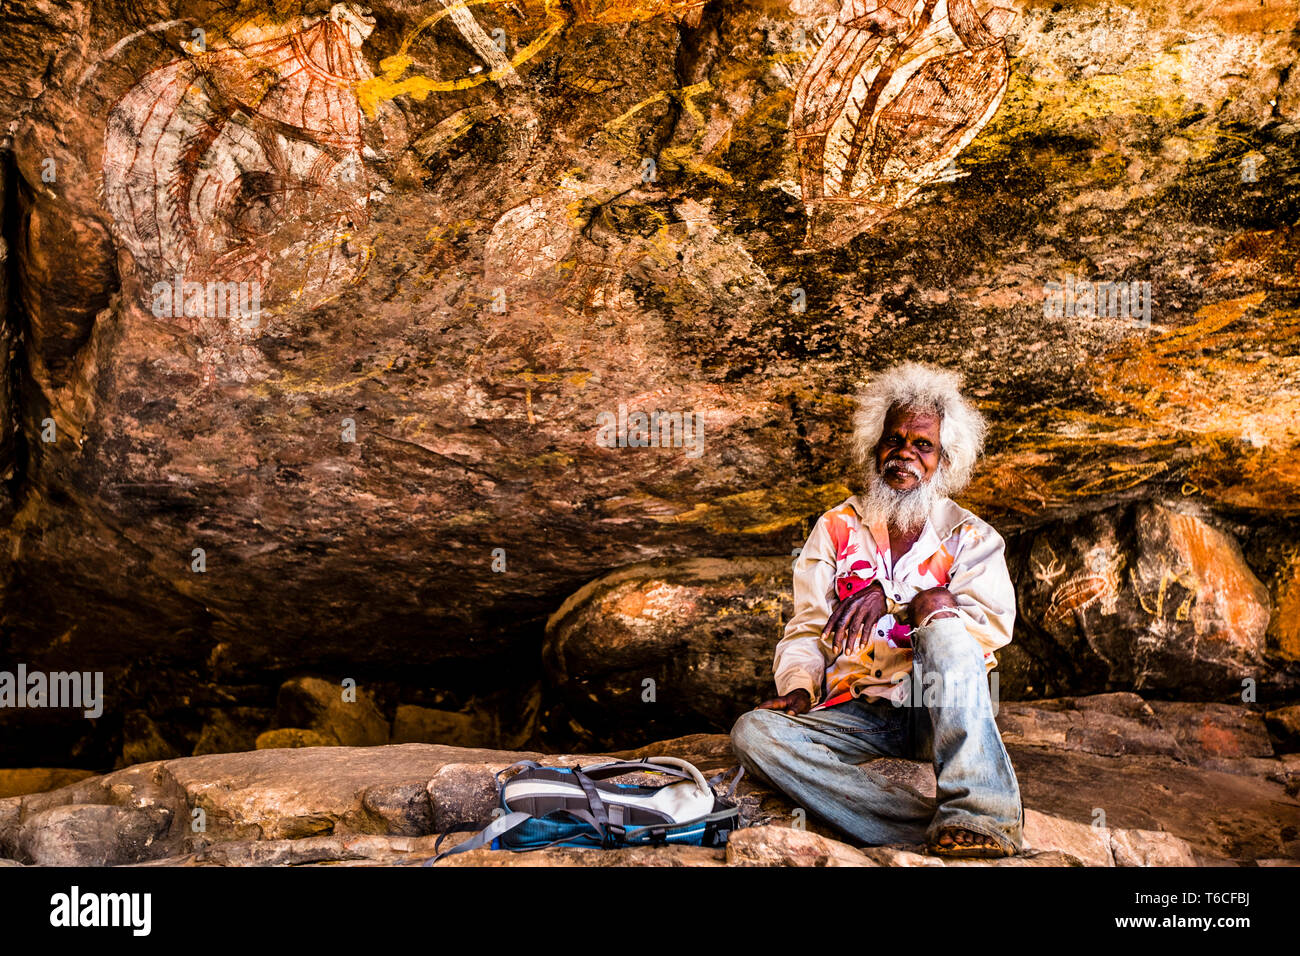 Native Guide explaining Aborigine Rock Art in Long Tom Dreaming, Gunbalanya, Australia Stock Photo